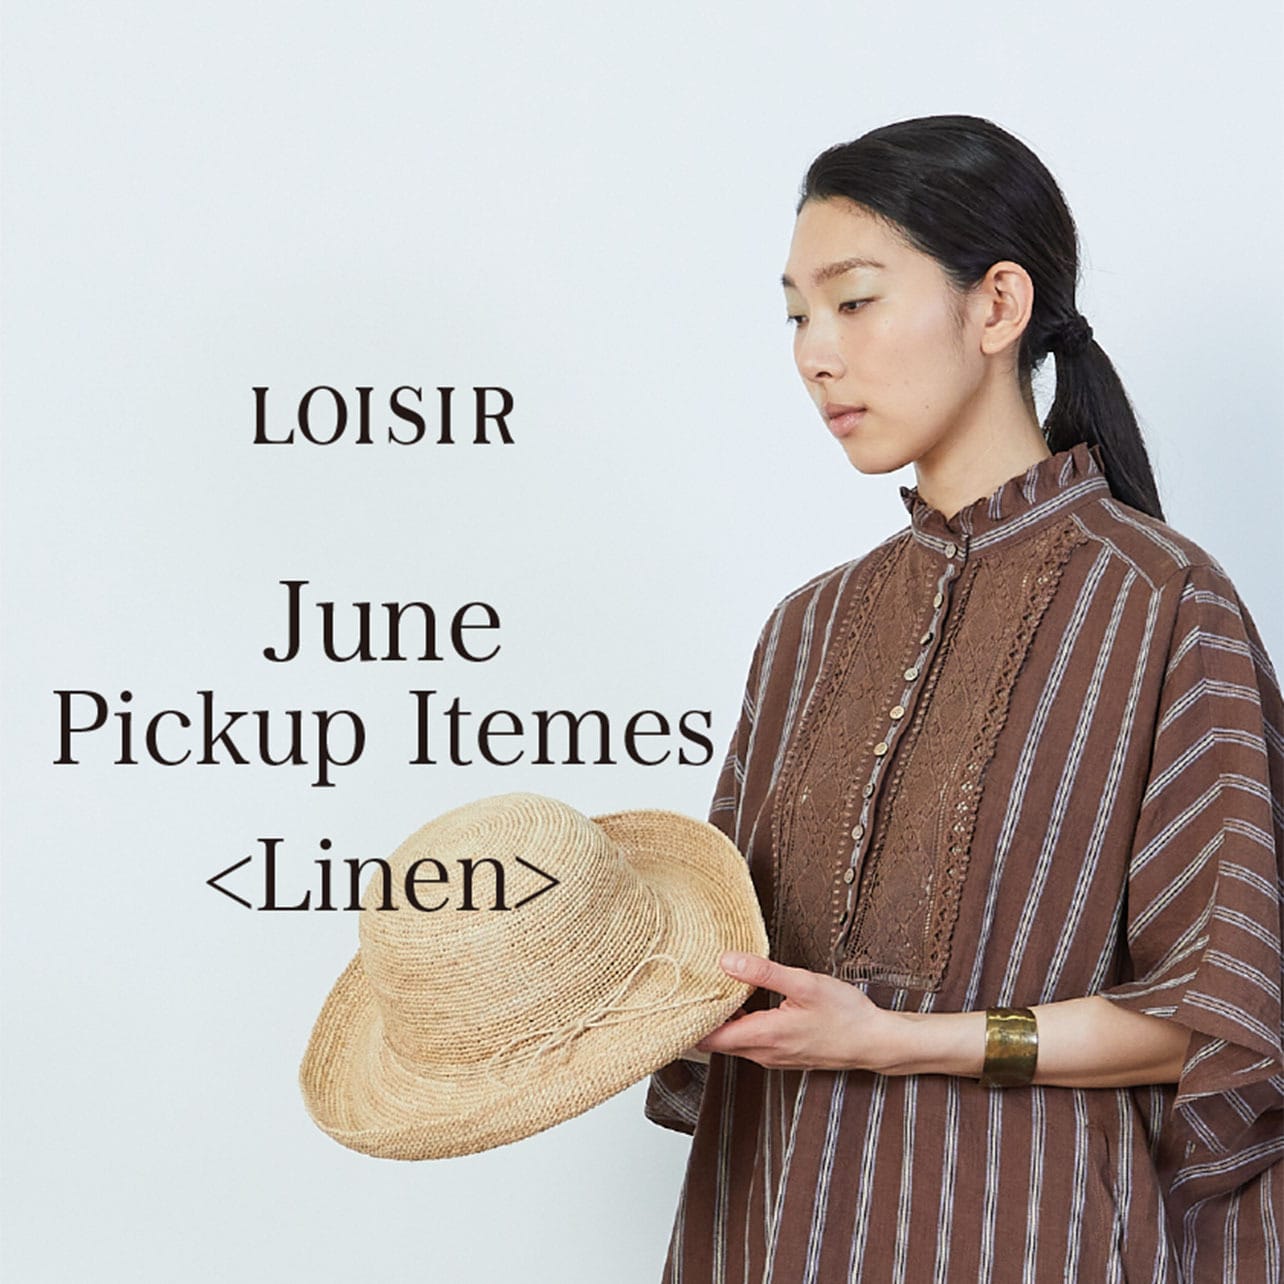 June Pickup Items 〈Linen〉